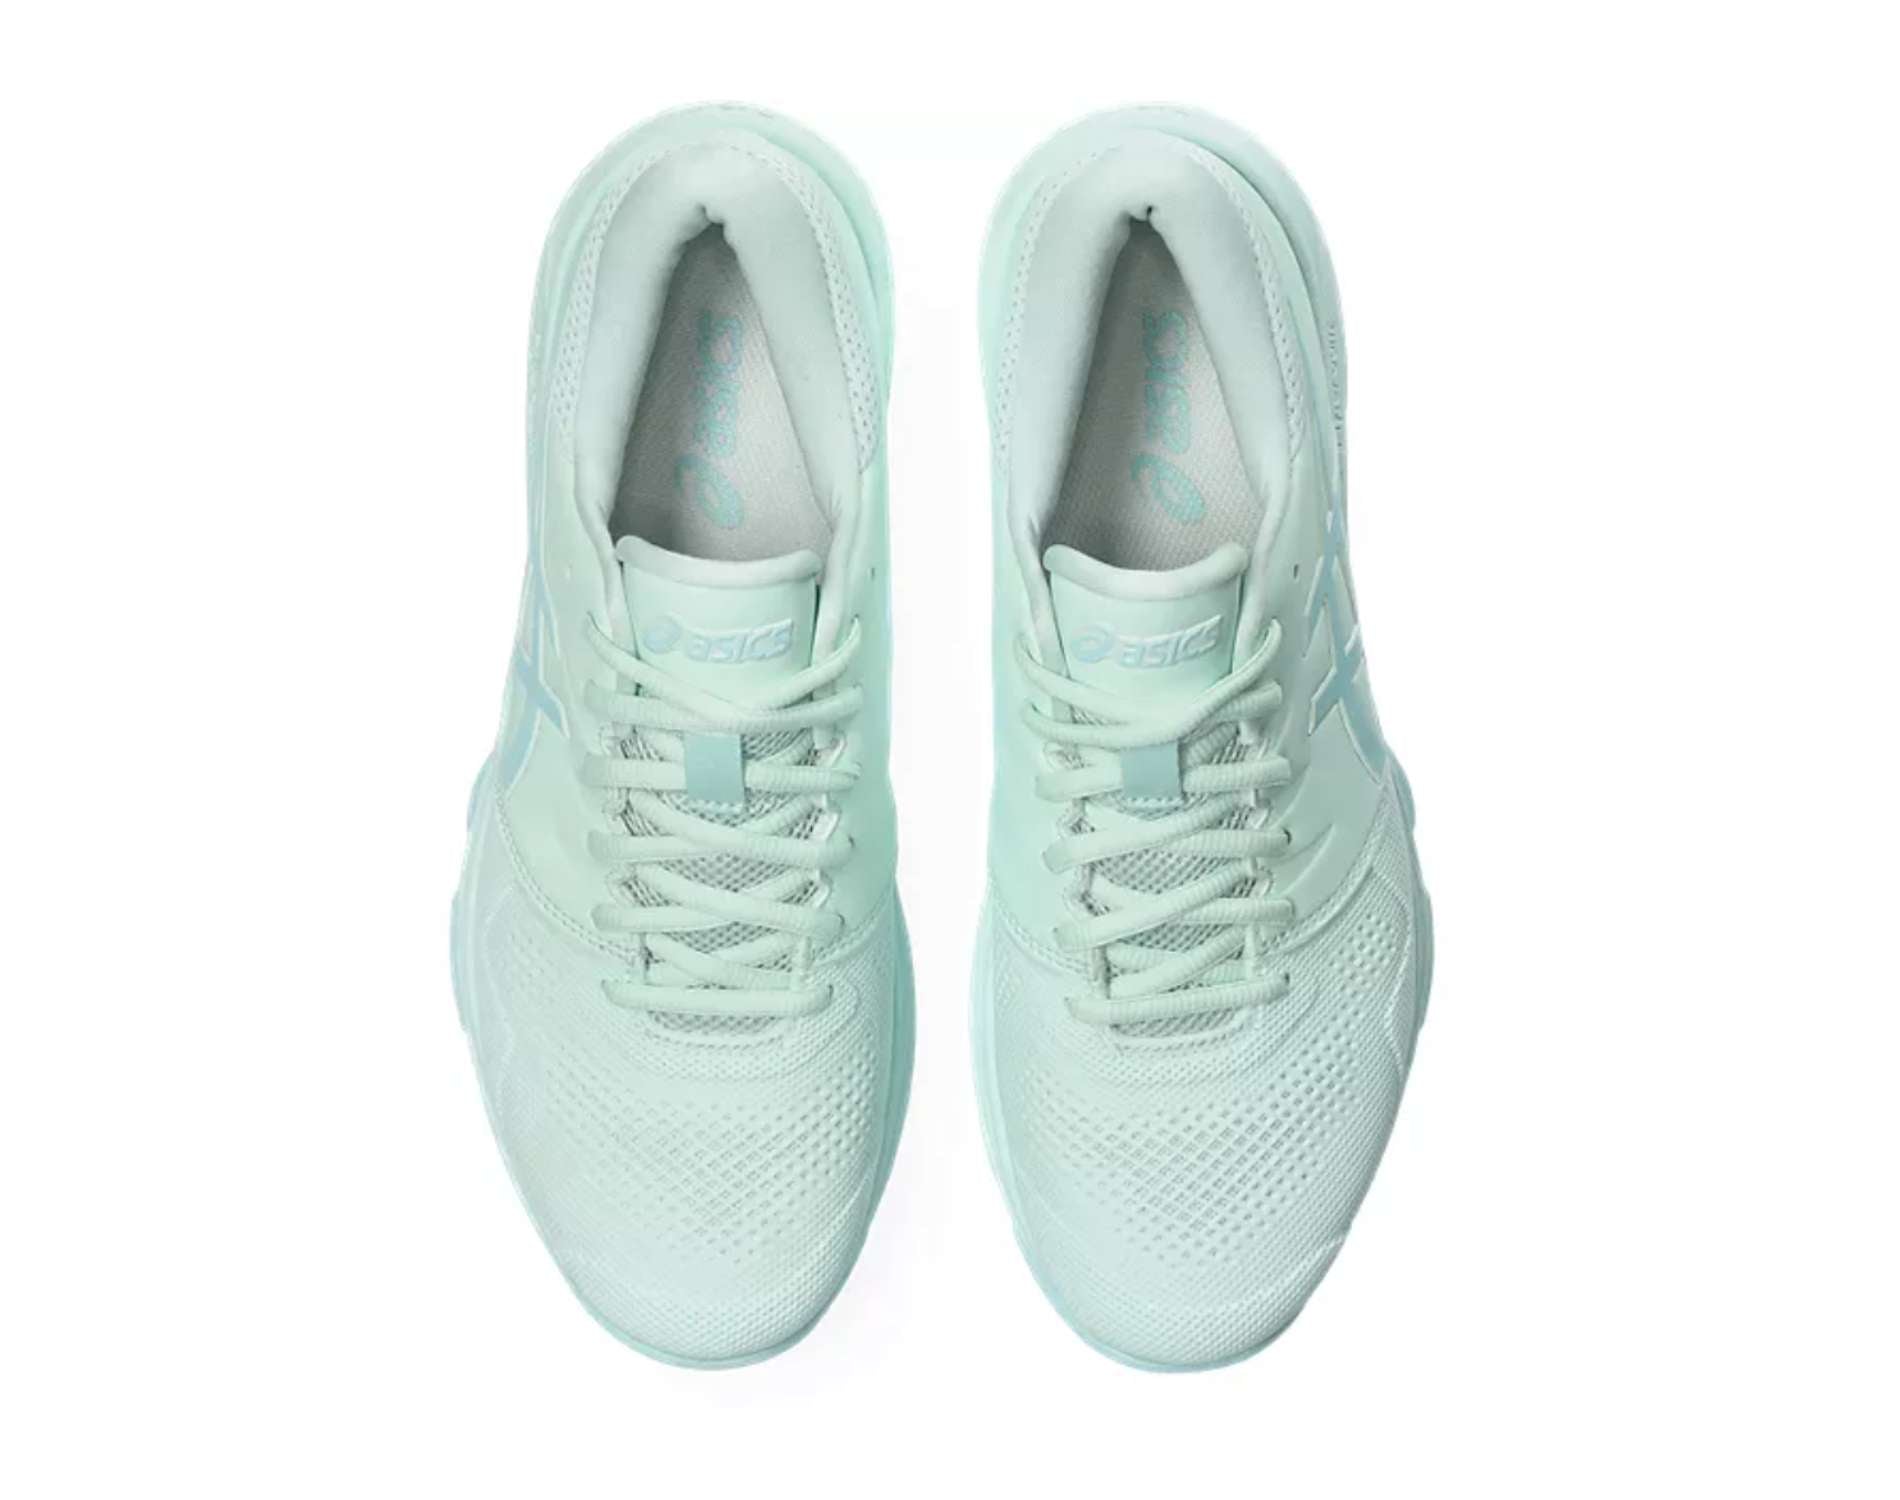 Asics Netburner 20 womens netball shoe in b standard width in soothing sea aquamarine colour